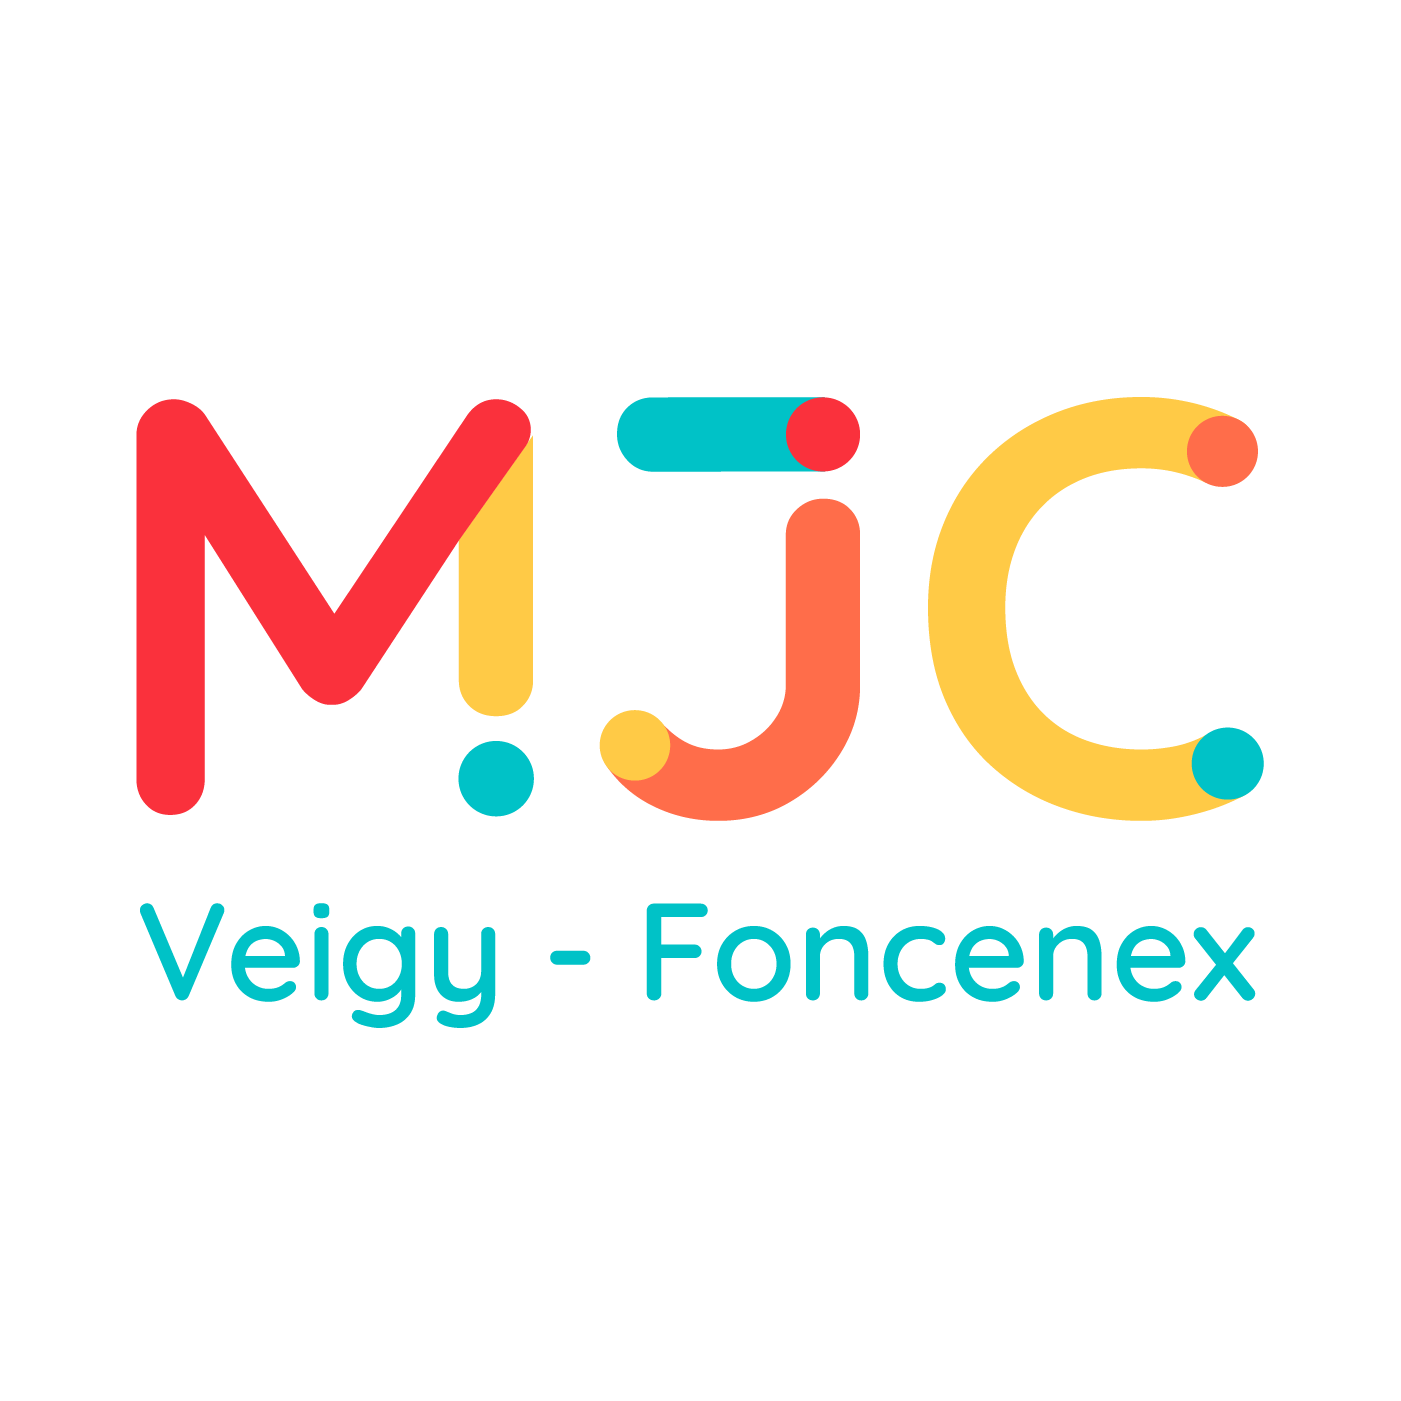 MJC VEIGY FONCENEX